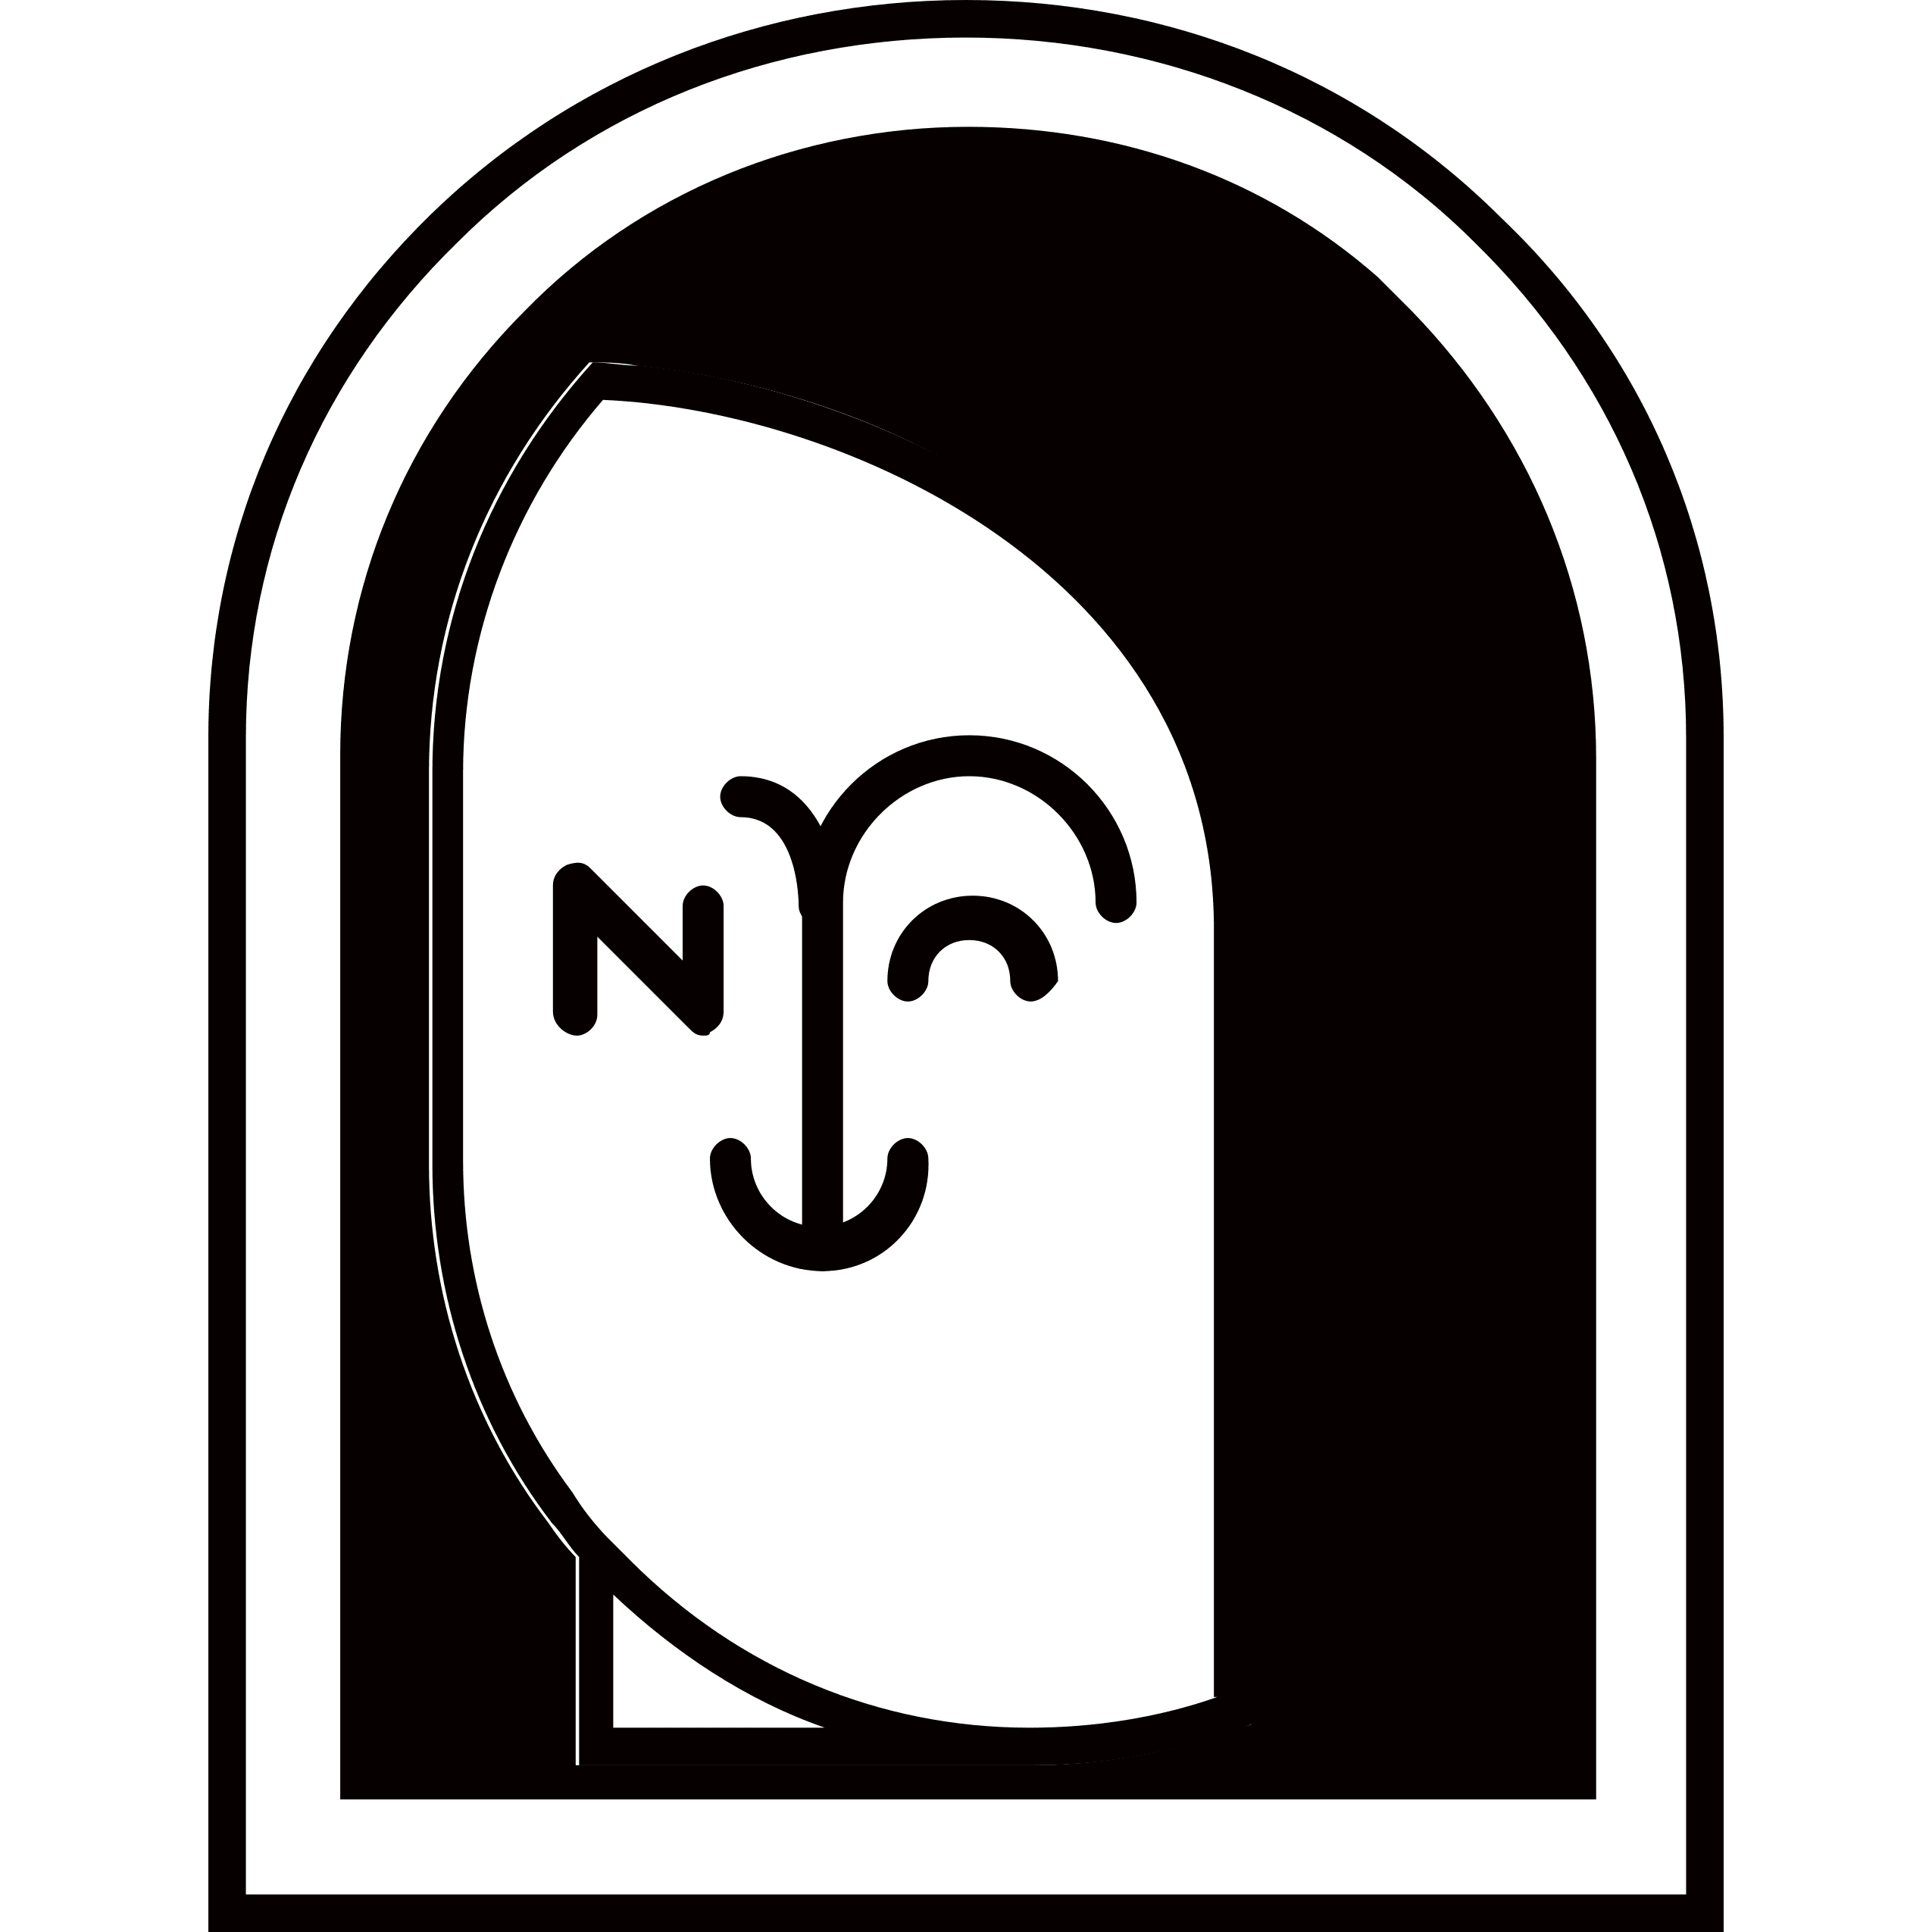 APENFT (NFT) logo